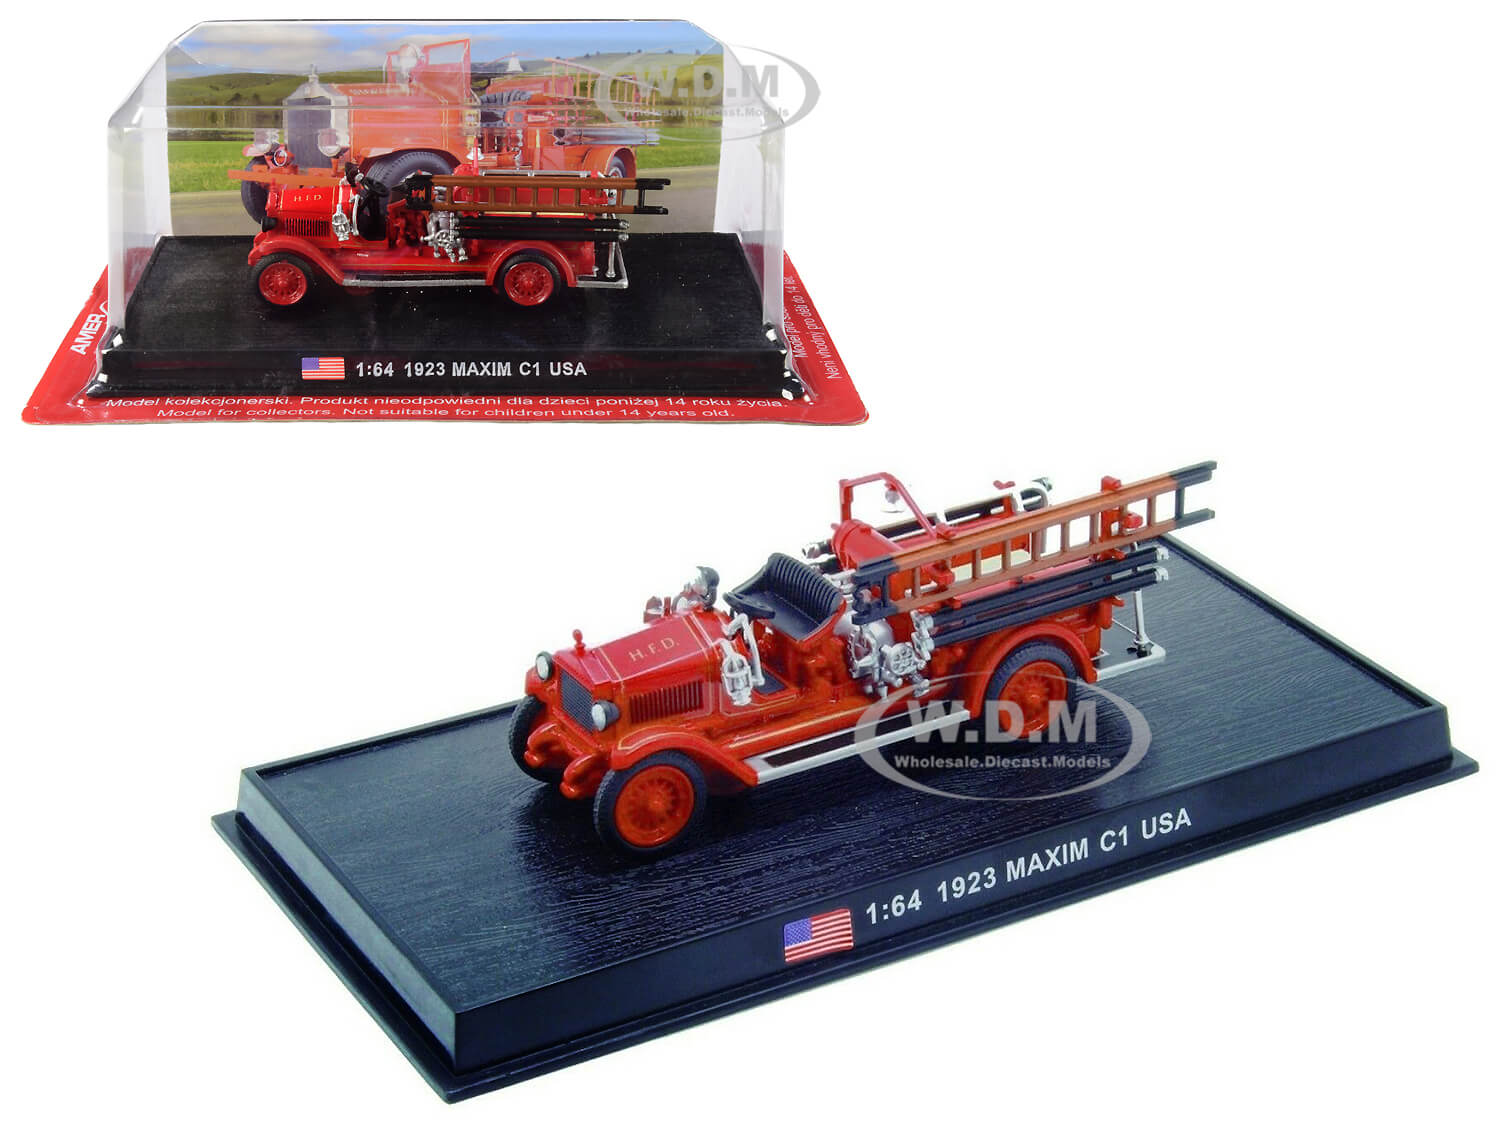 1923 Maxim C1 Fire Engine "houston Fire Department" (h.f.d.) (houston Texas) 1/64 Diecast Model By Amercom